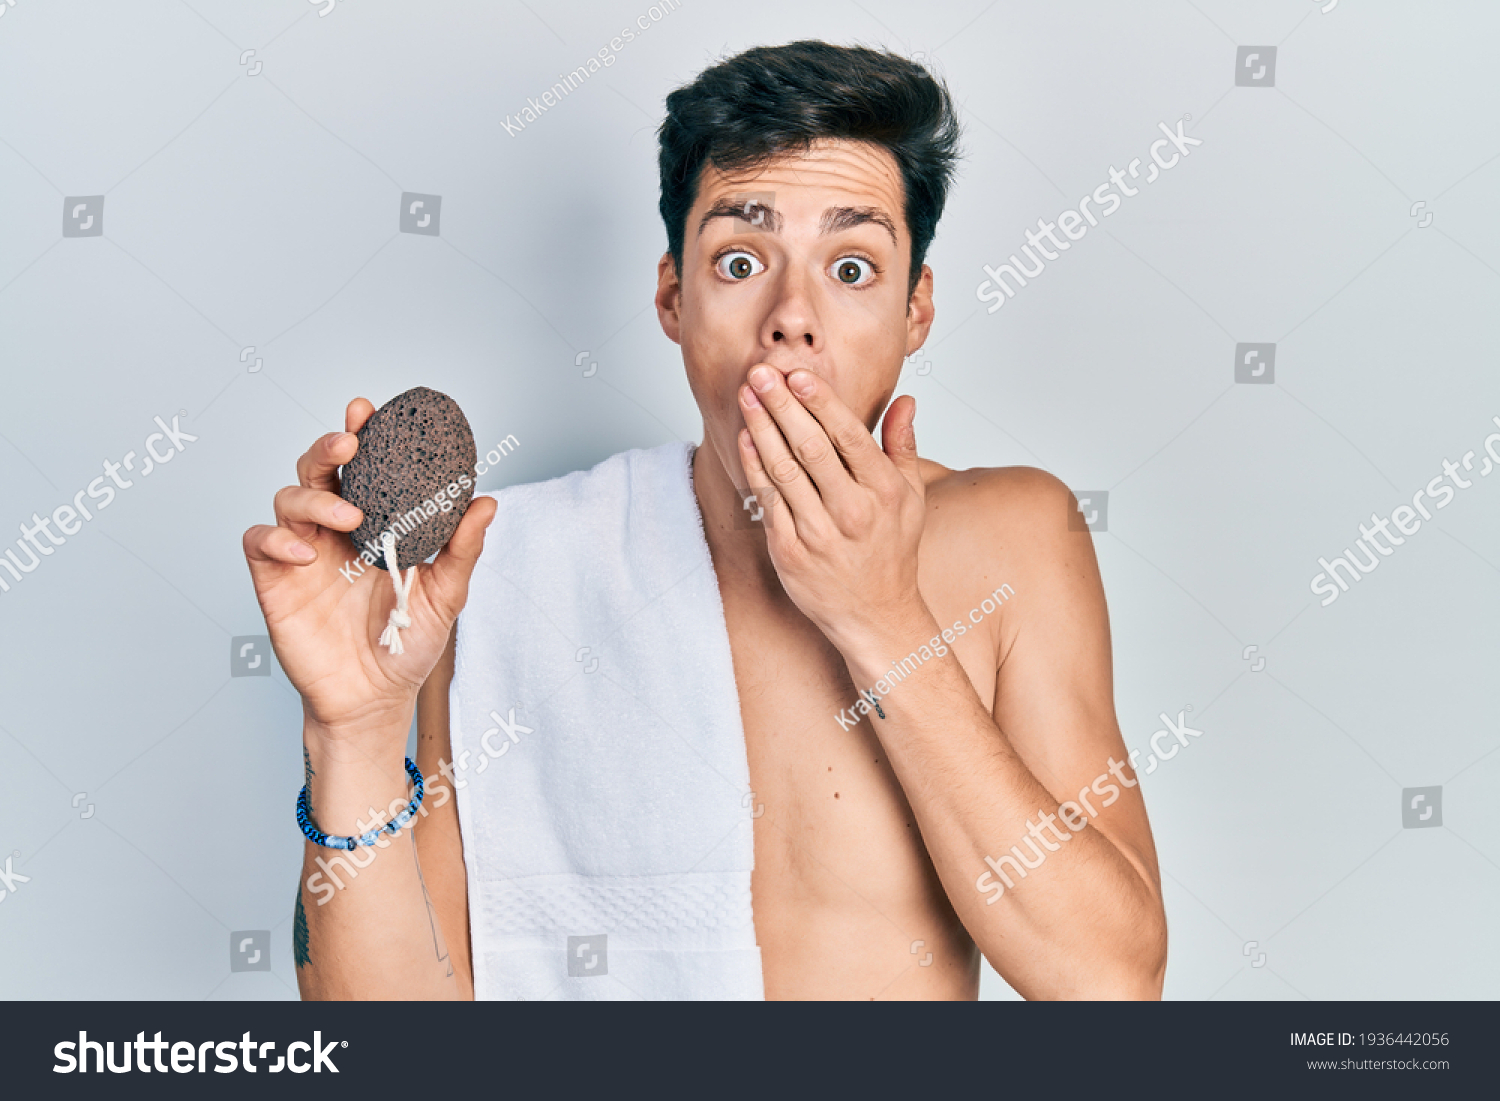 guy eating a girl up naked